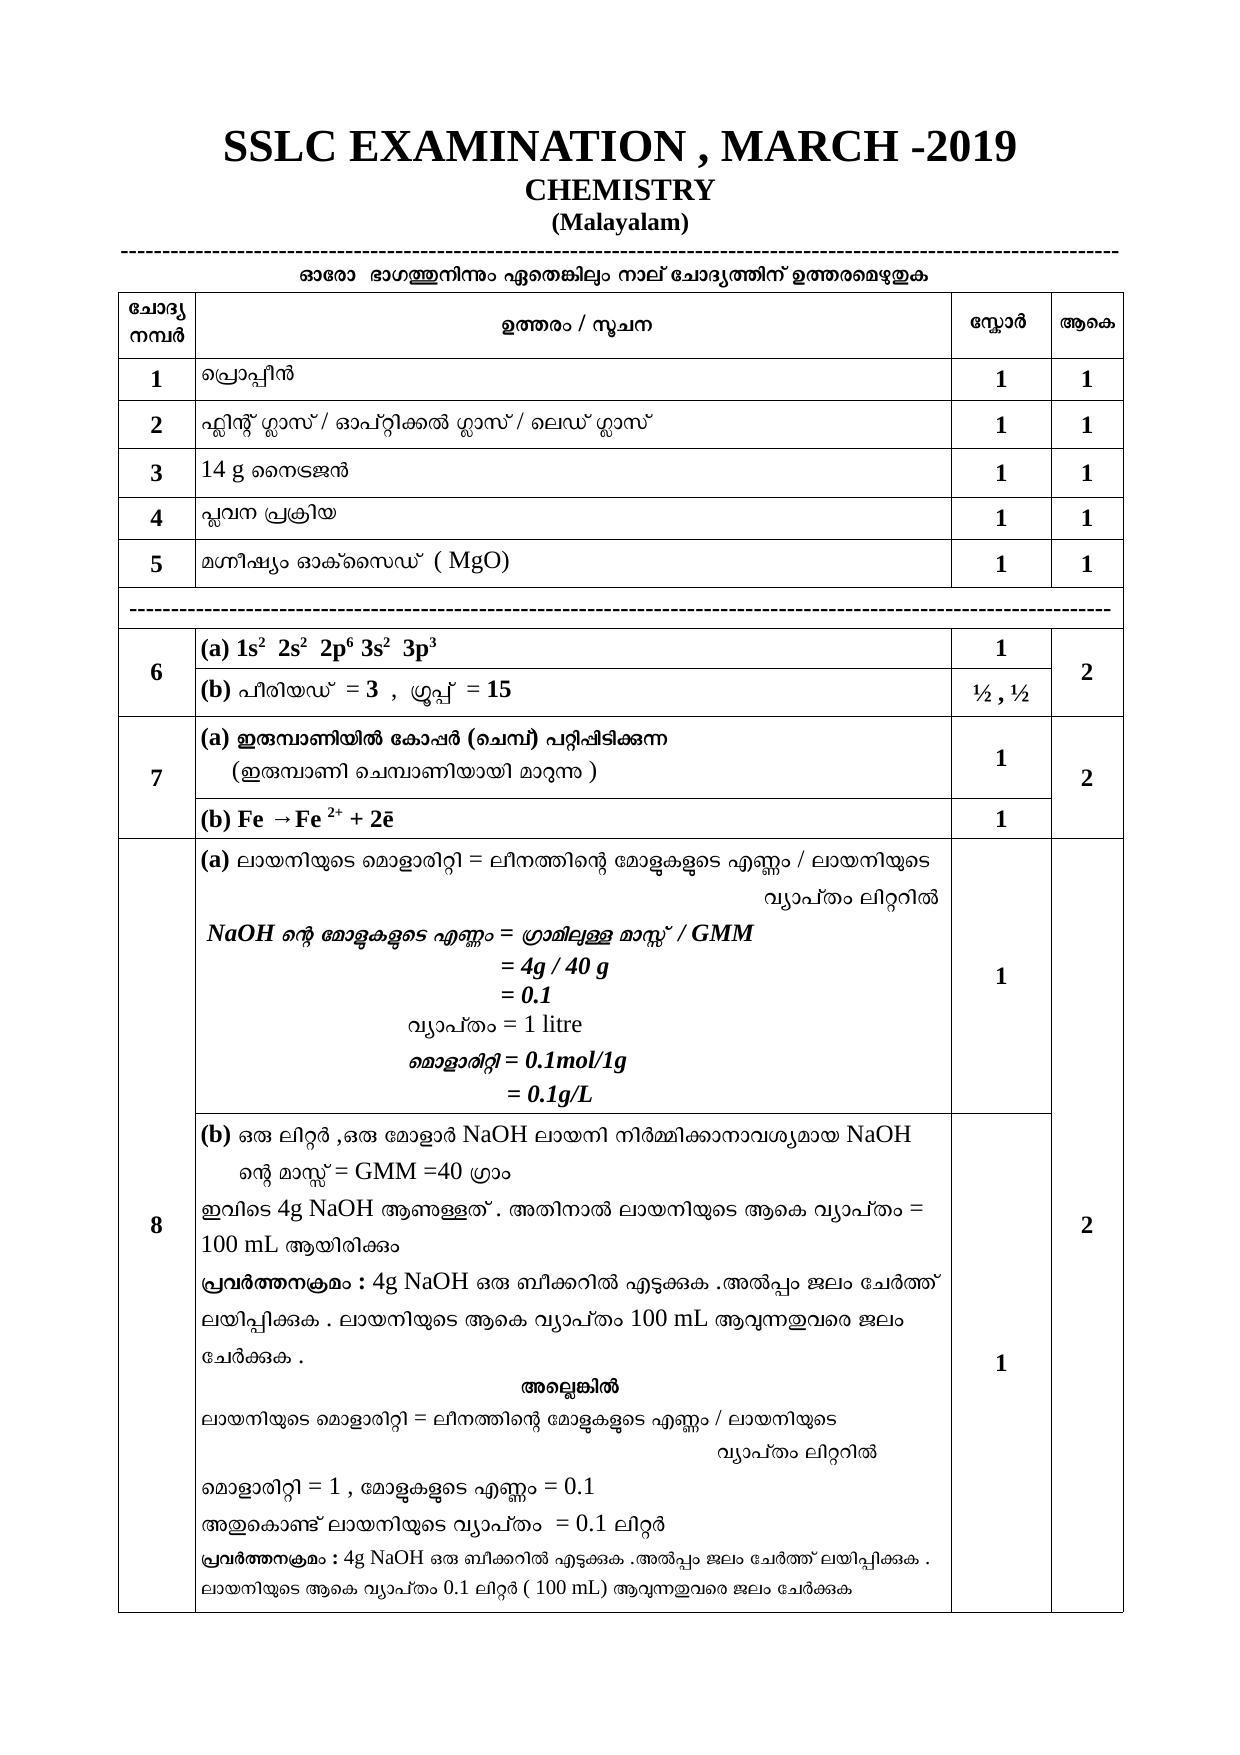 Kerala SSLC 2019 Chemistry Answer Key (MM) - Page 1